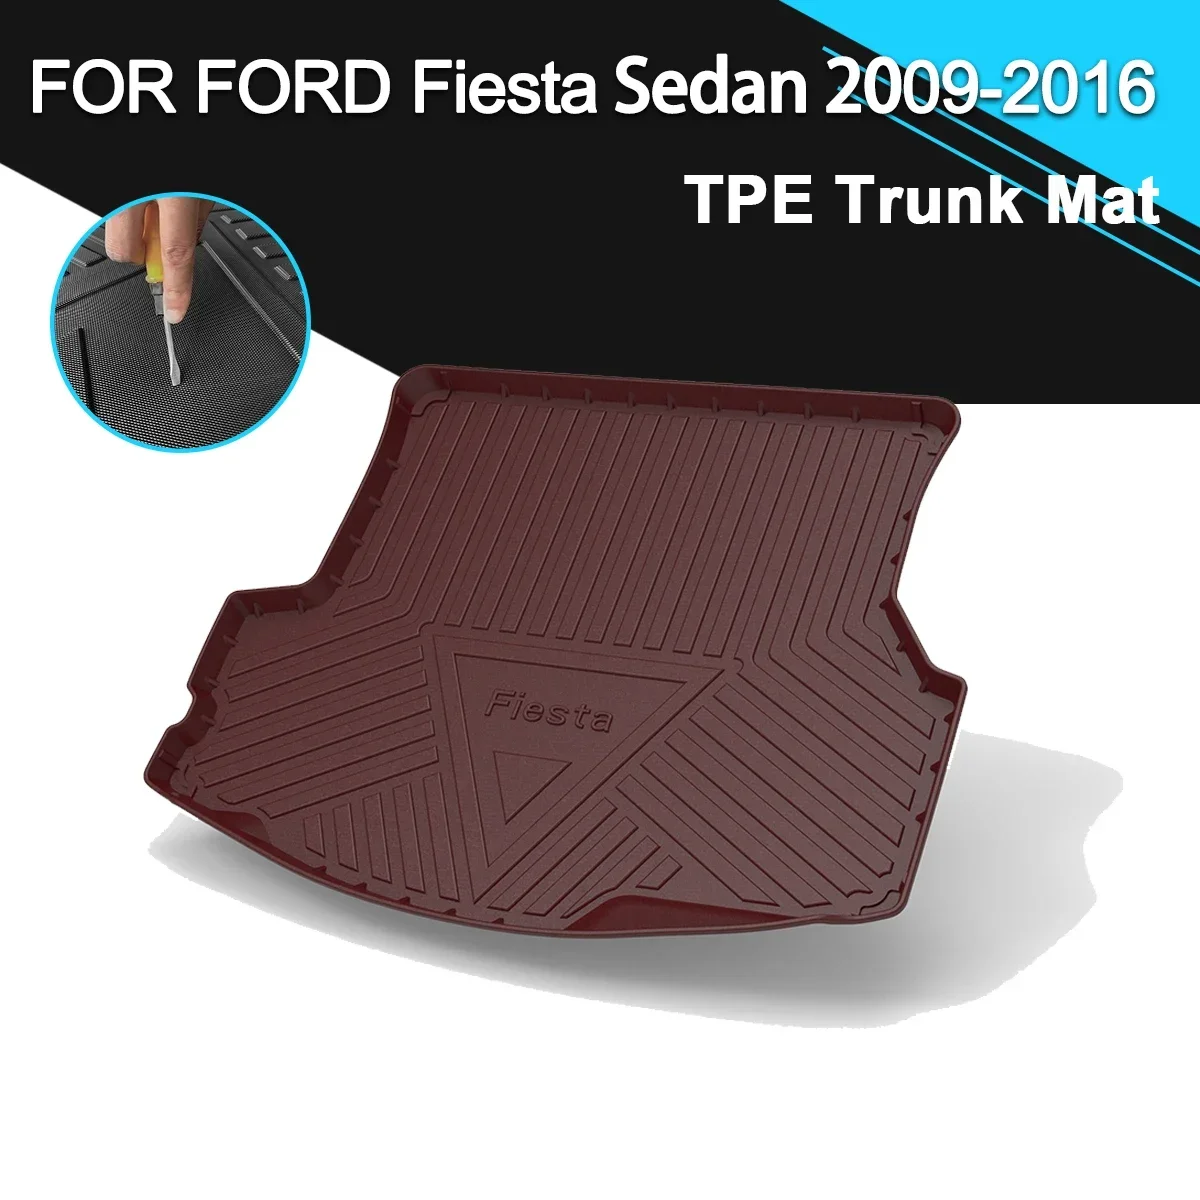 

Car Rear Trunk Cover Mat Rubber TPE Waterproof Non-Slip Cargo Liner Accessories For Ford Fiesta Sedan 2009-2016